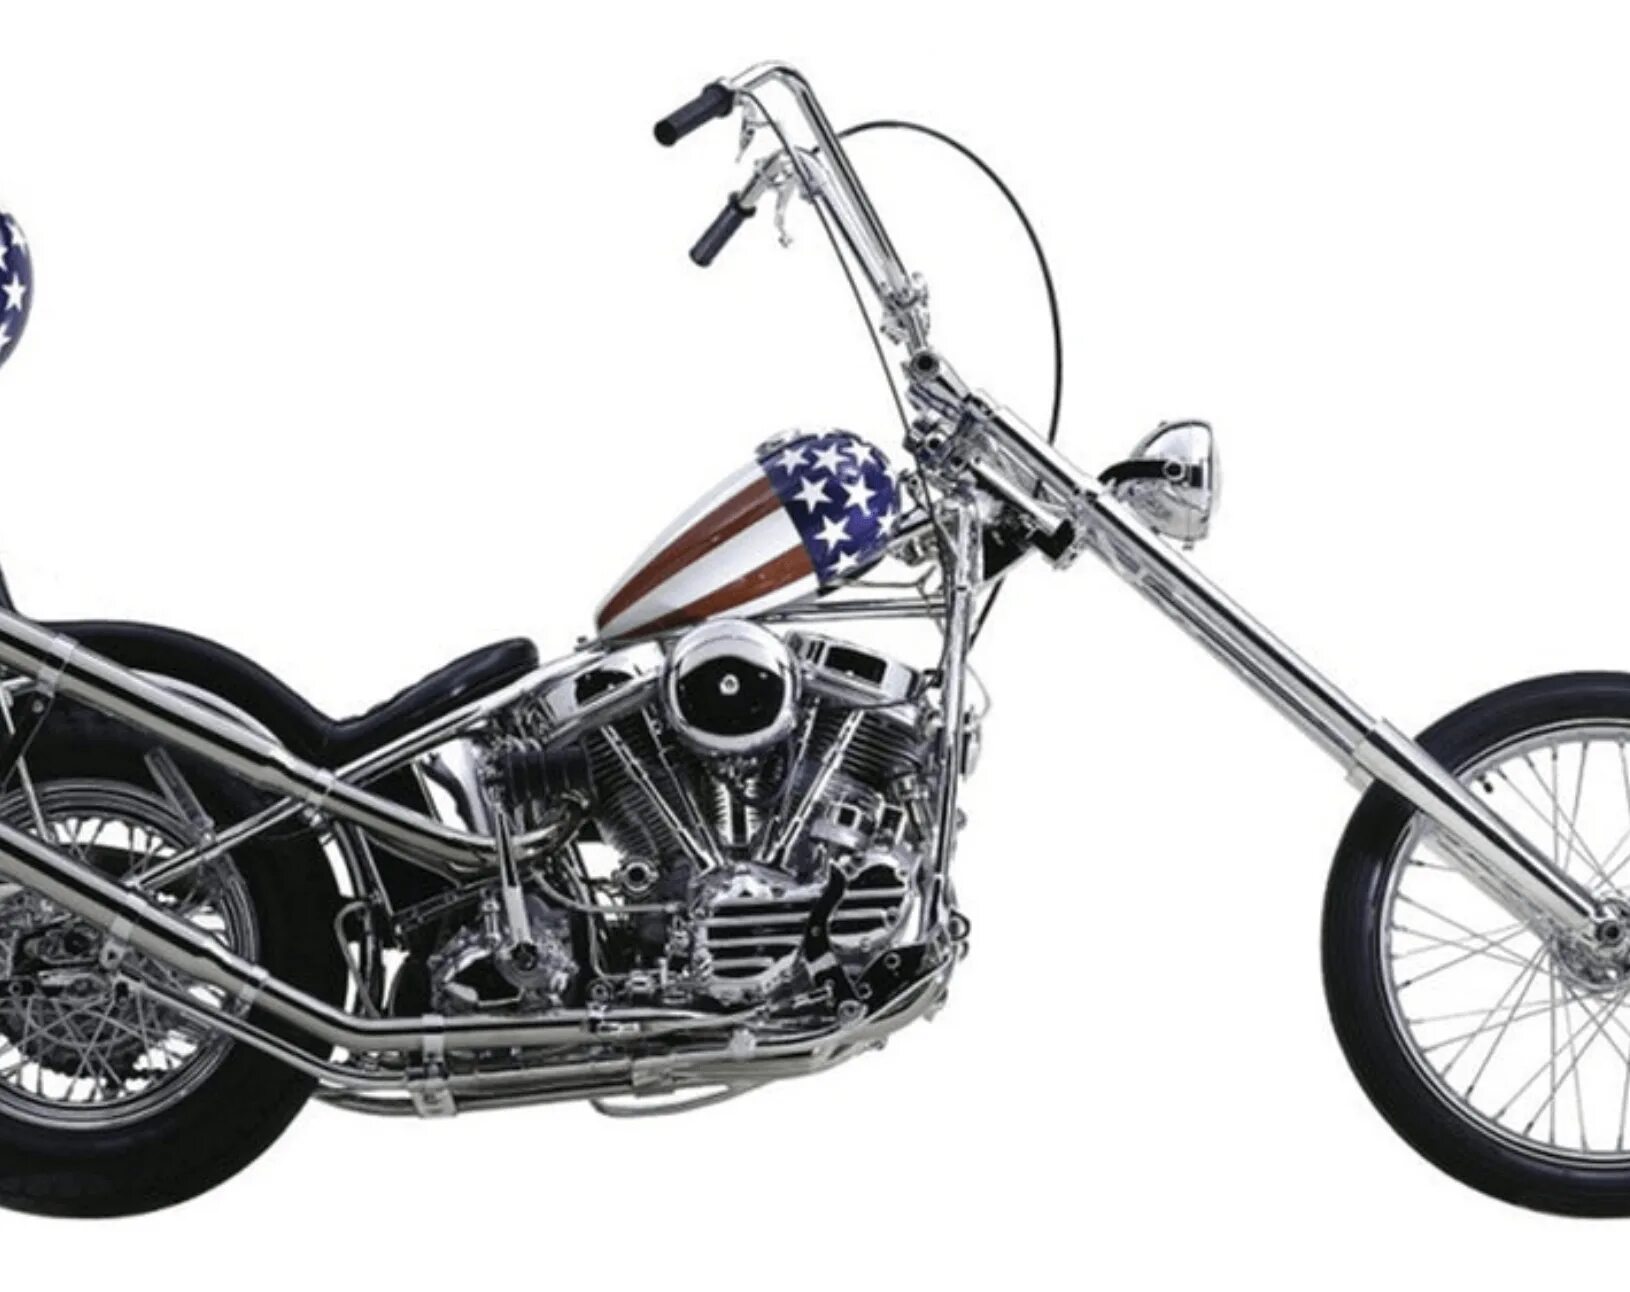 Мотоцикл Harley Davidson Chopper. Харлей Дэвидсон - чоппер Райдер. Харлей Дэвидсон мини чоппер. Harley Davidson Panhead.